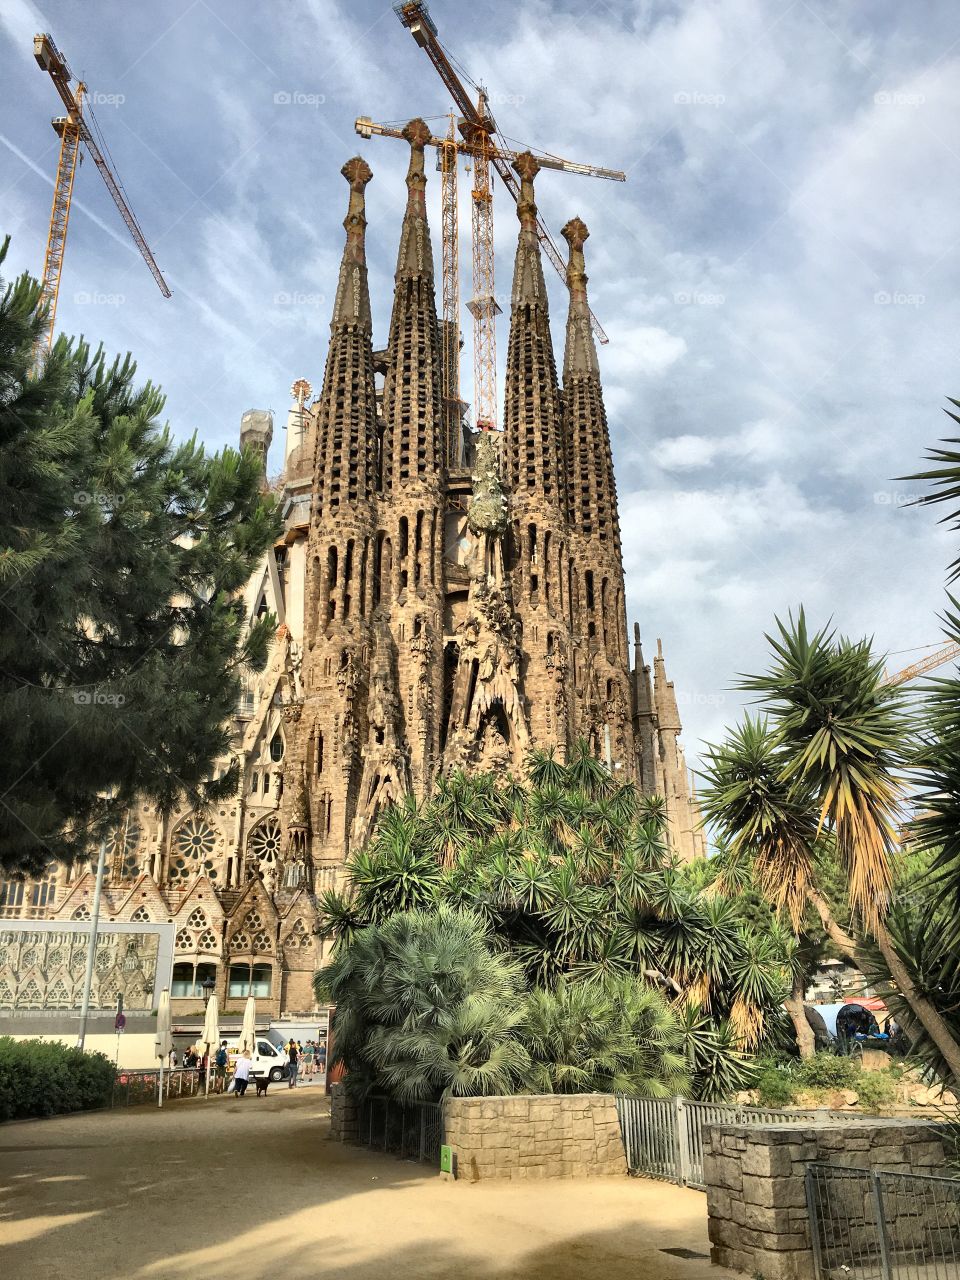 AWESOME place, Gaudi was amazing 🌍👏🏻👍🏻💪🏿#instagram #barcelona #blog #town #michaltoloczkopodróżnik #michaltoloczko #ilovebarcelona #sagradafamilia #catalunya #trip #travelling #traveller #photo #view #discover #building #travels #travelphoto #traveltheworld #travelawesome #inspiration #traveldiary #travelblog #discoveryourworld #adventuretime #tubyłem #photooftheday #world @wakacyjnipiraci @barcelona_barcelona @visitbarcelona @catalunyaexperience @loves_catalunya